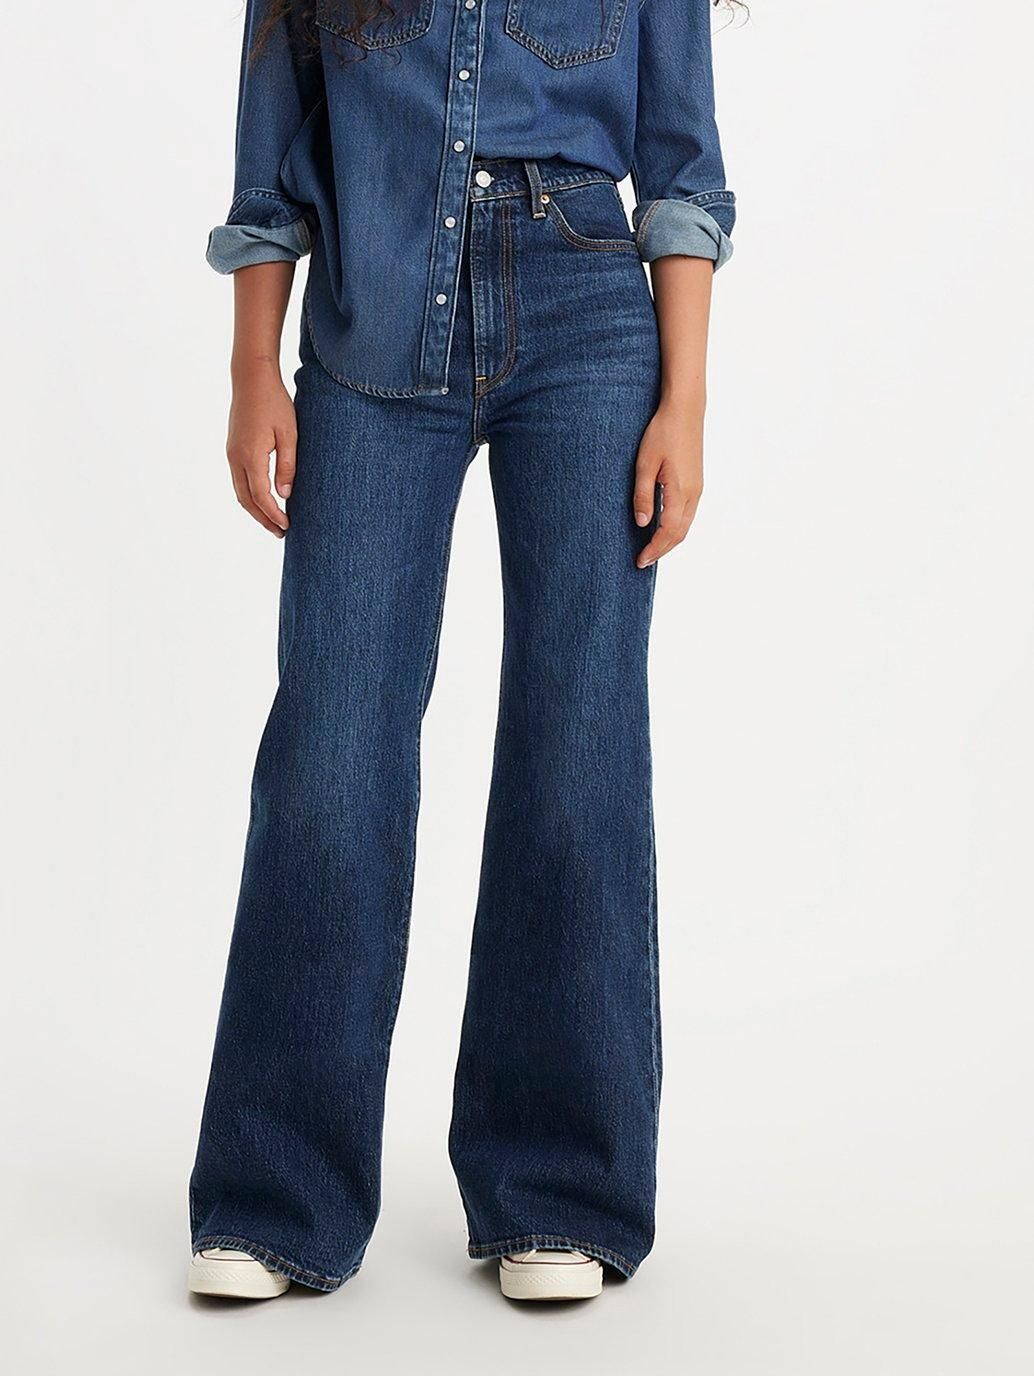 Levi's - Quần jeans dài nữ Ribcage Bell Women's Jeans